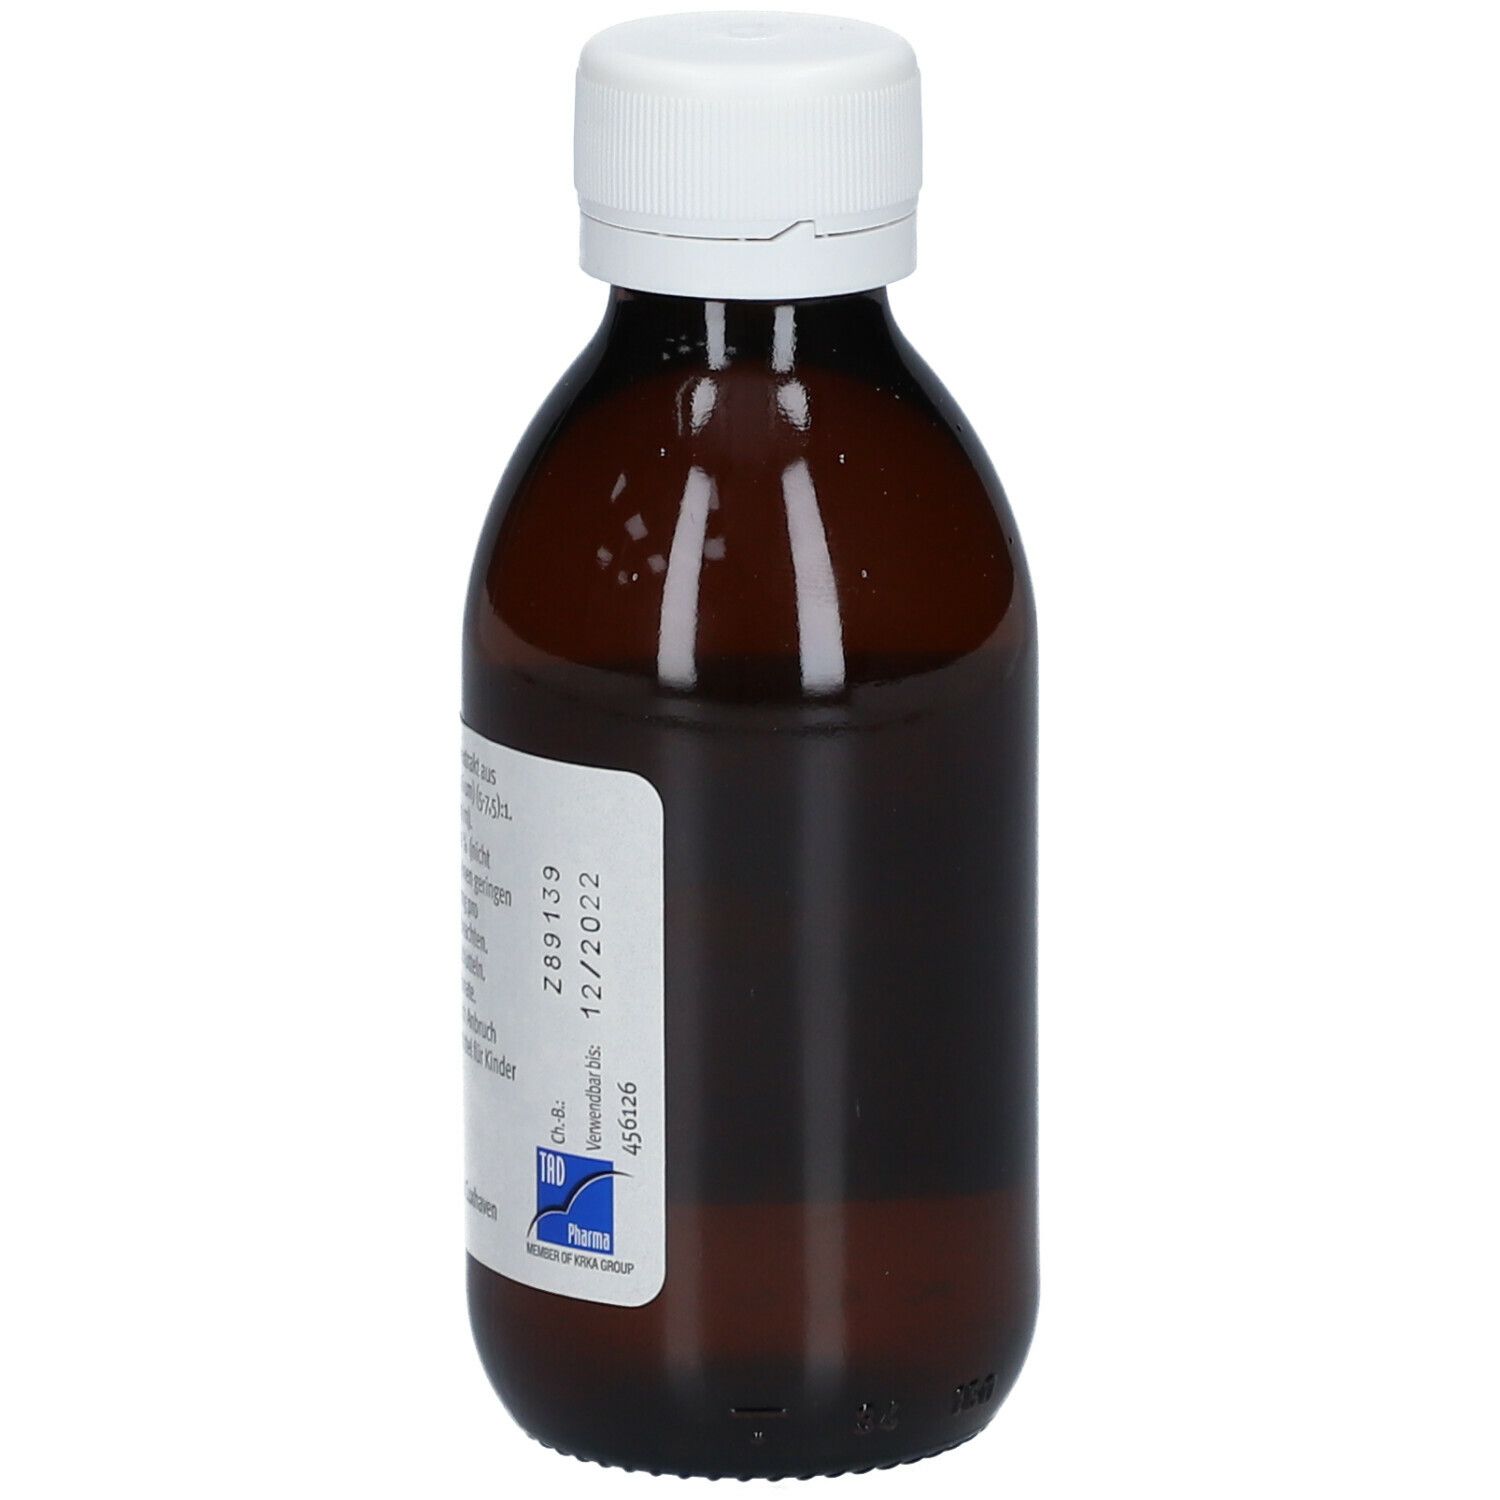 Herbion® Efeu 7 mg/ml Sirup